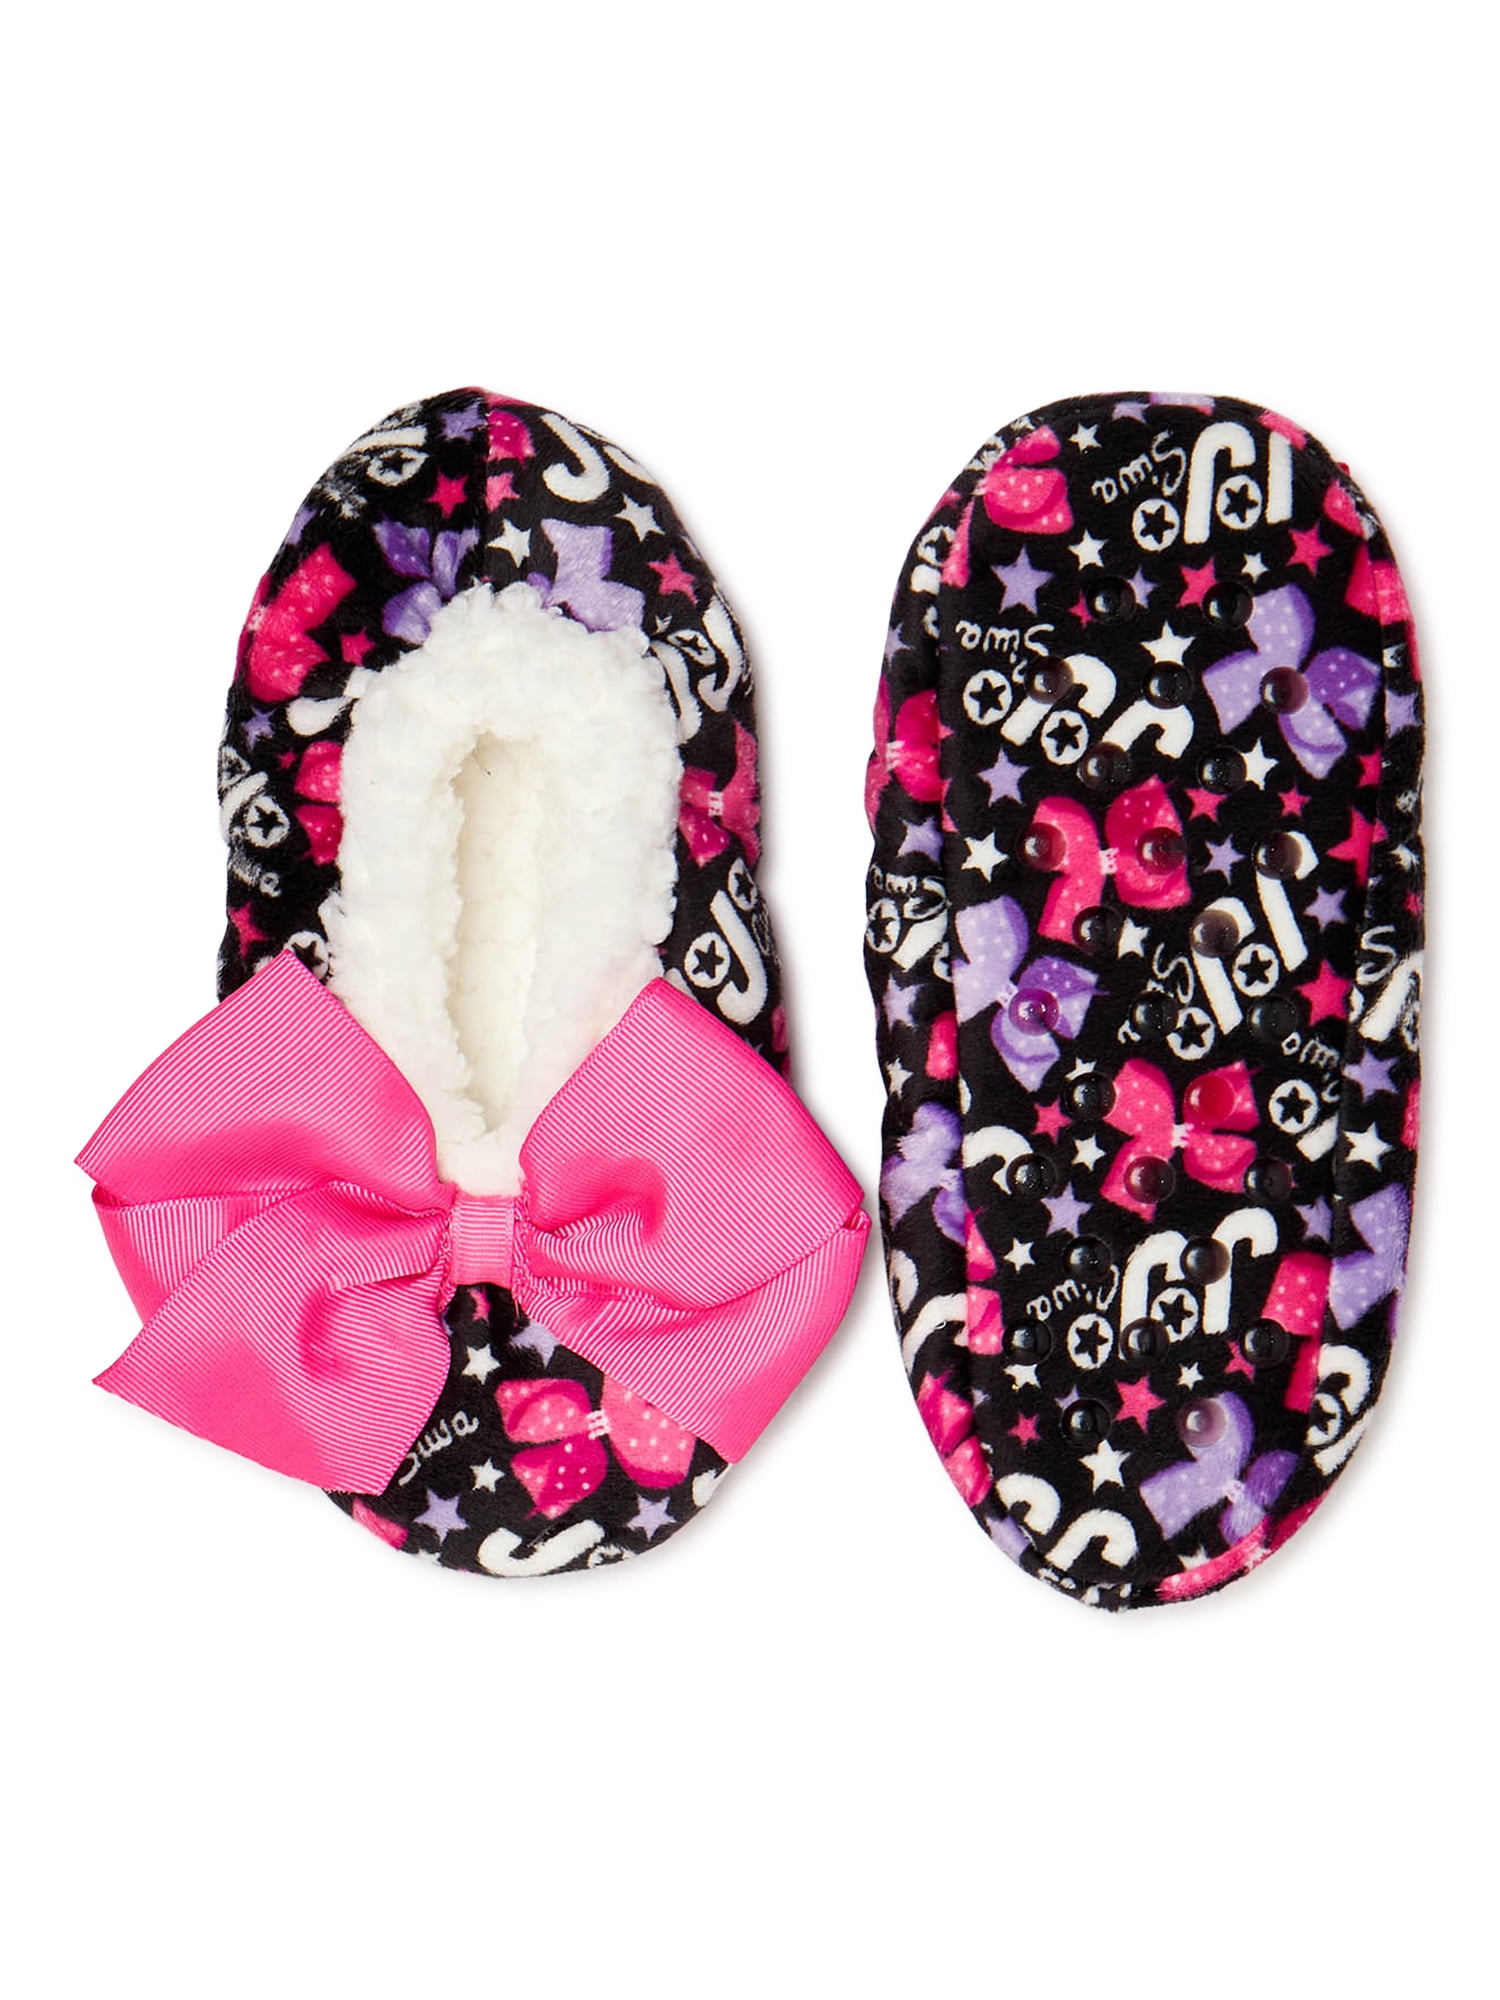 JoJo Siwa Sparkly Babba Slipper Socks with Pink Bow Size S/M shoe size 8-13 